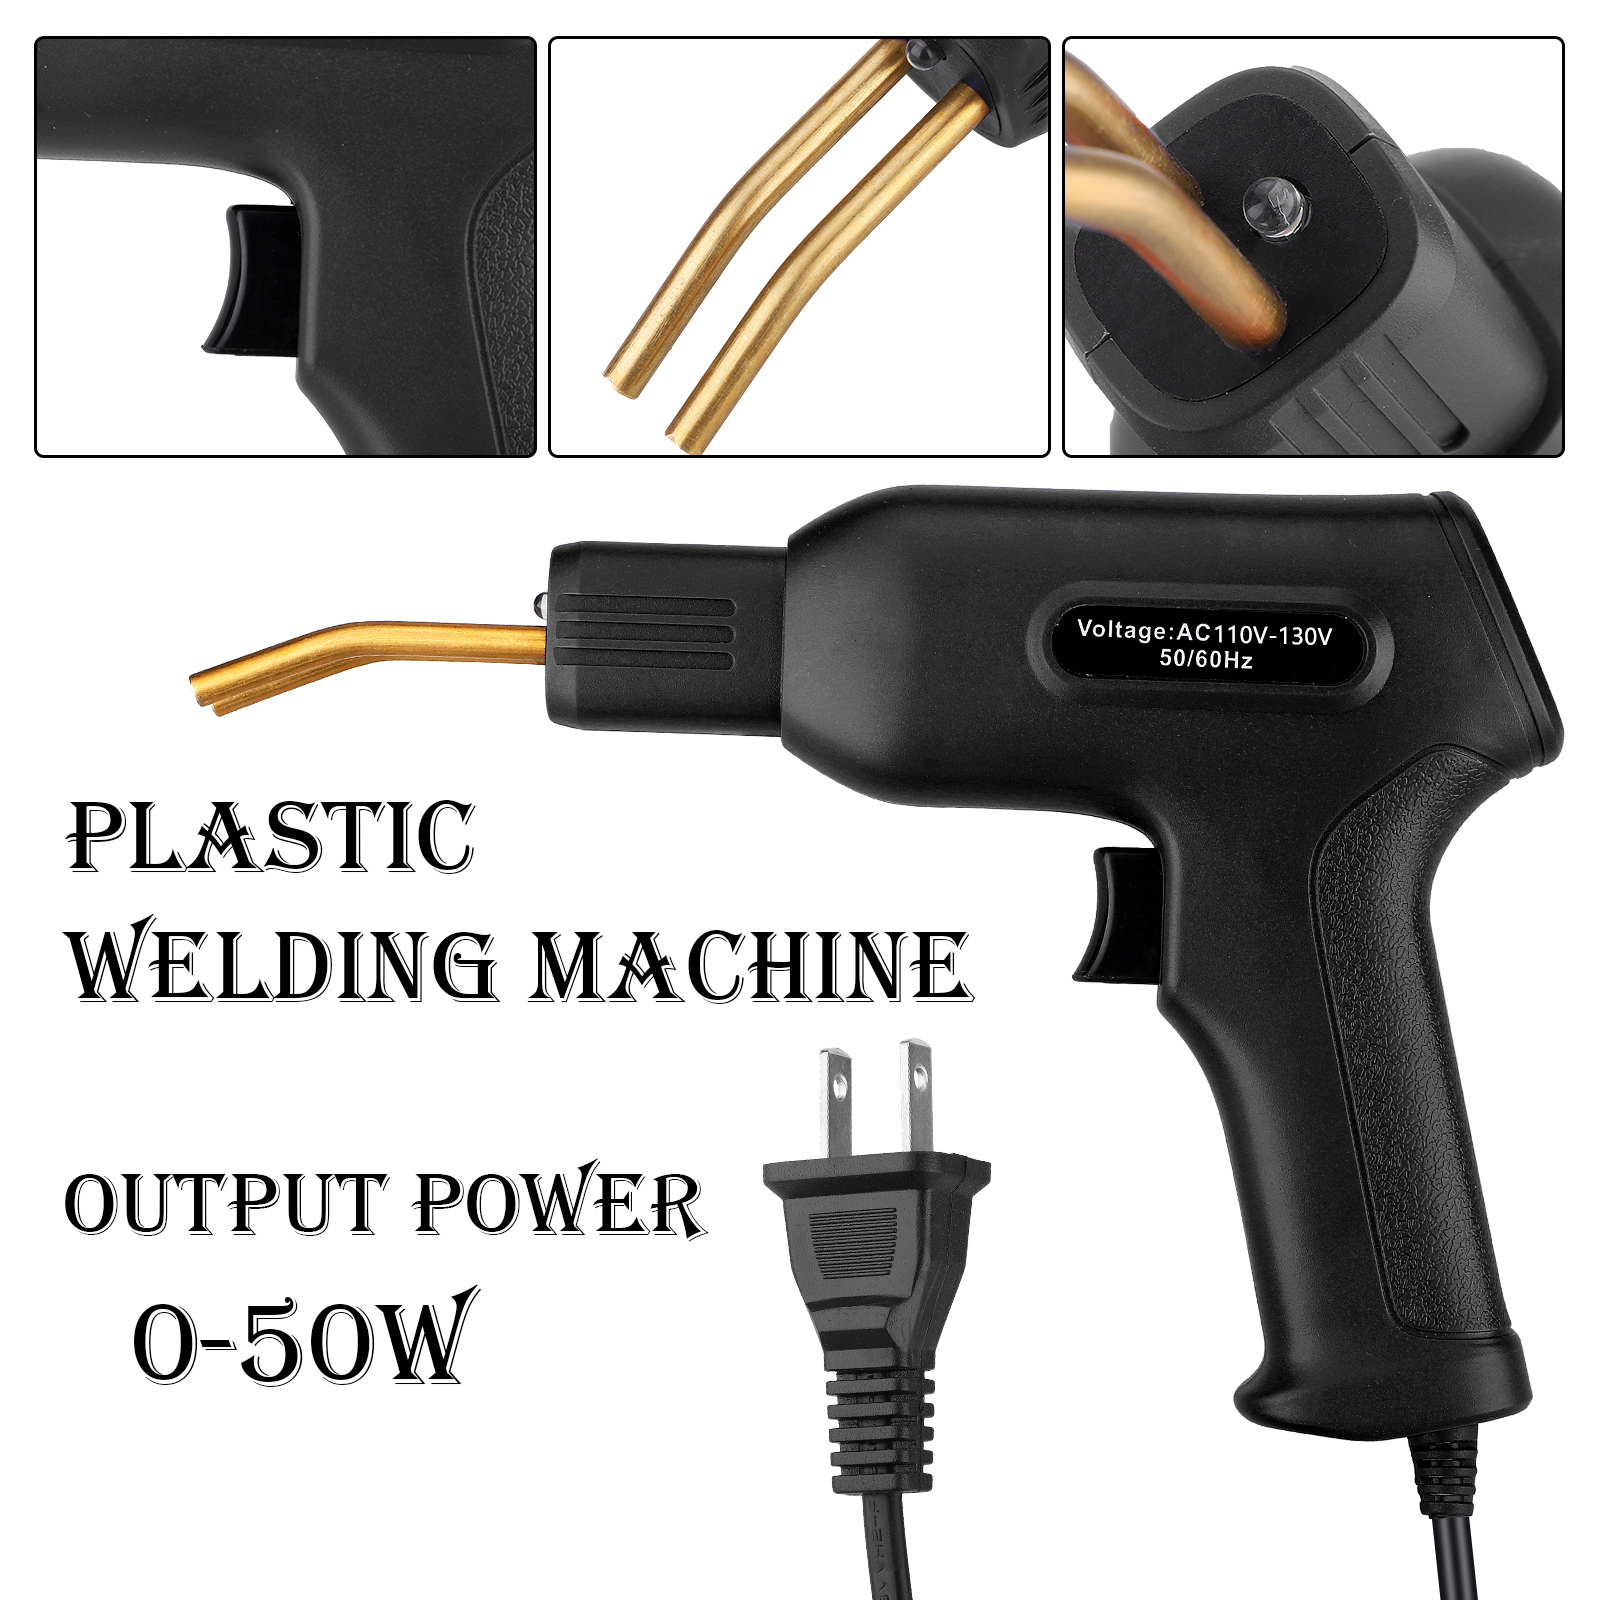 50W-Handy-Electric-Welding-Machine-Plastics-Welders-Garage-Tools-Hot-Staplers-Staple-PVC-Repair-Mach-1871582-1